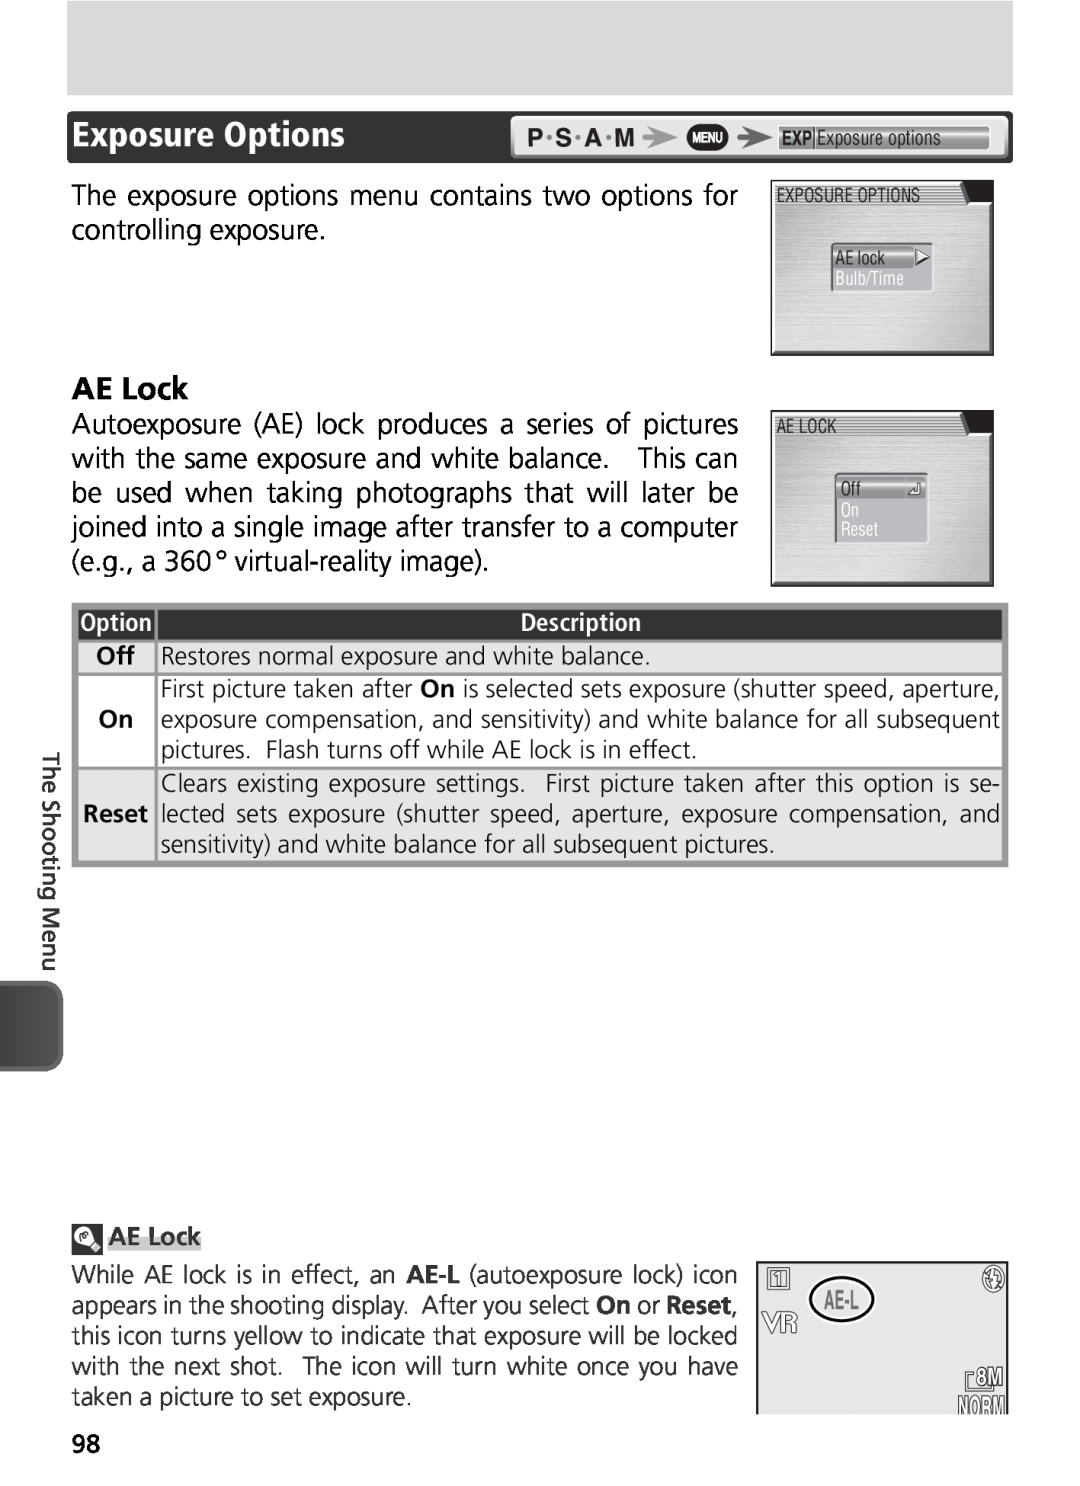 Nikon COOLPIX8800 manual Exposure Options, AE Lock, Ae-L 